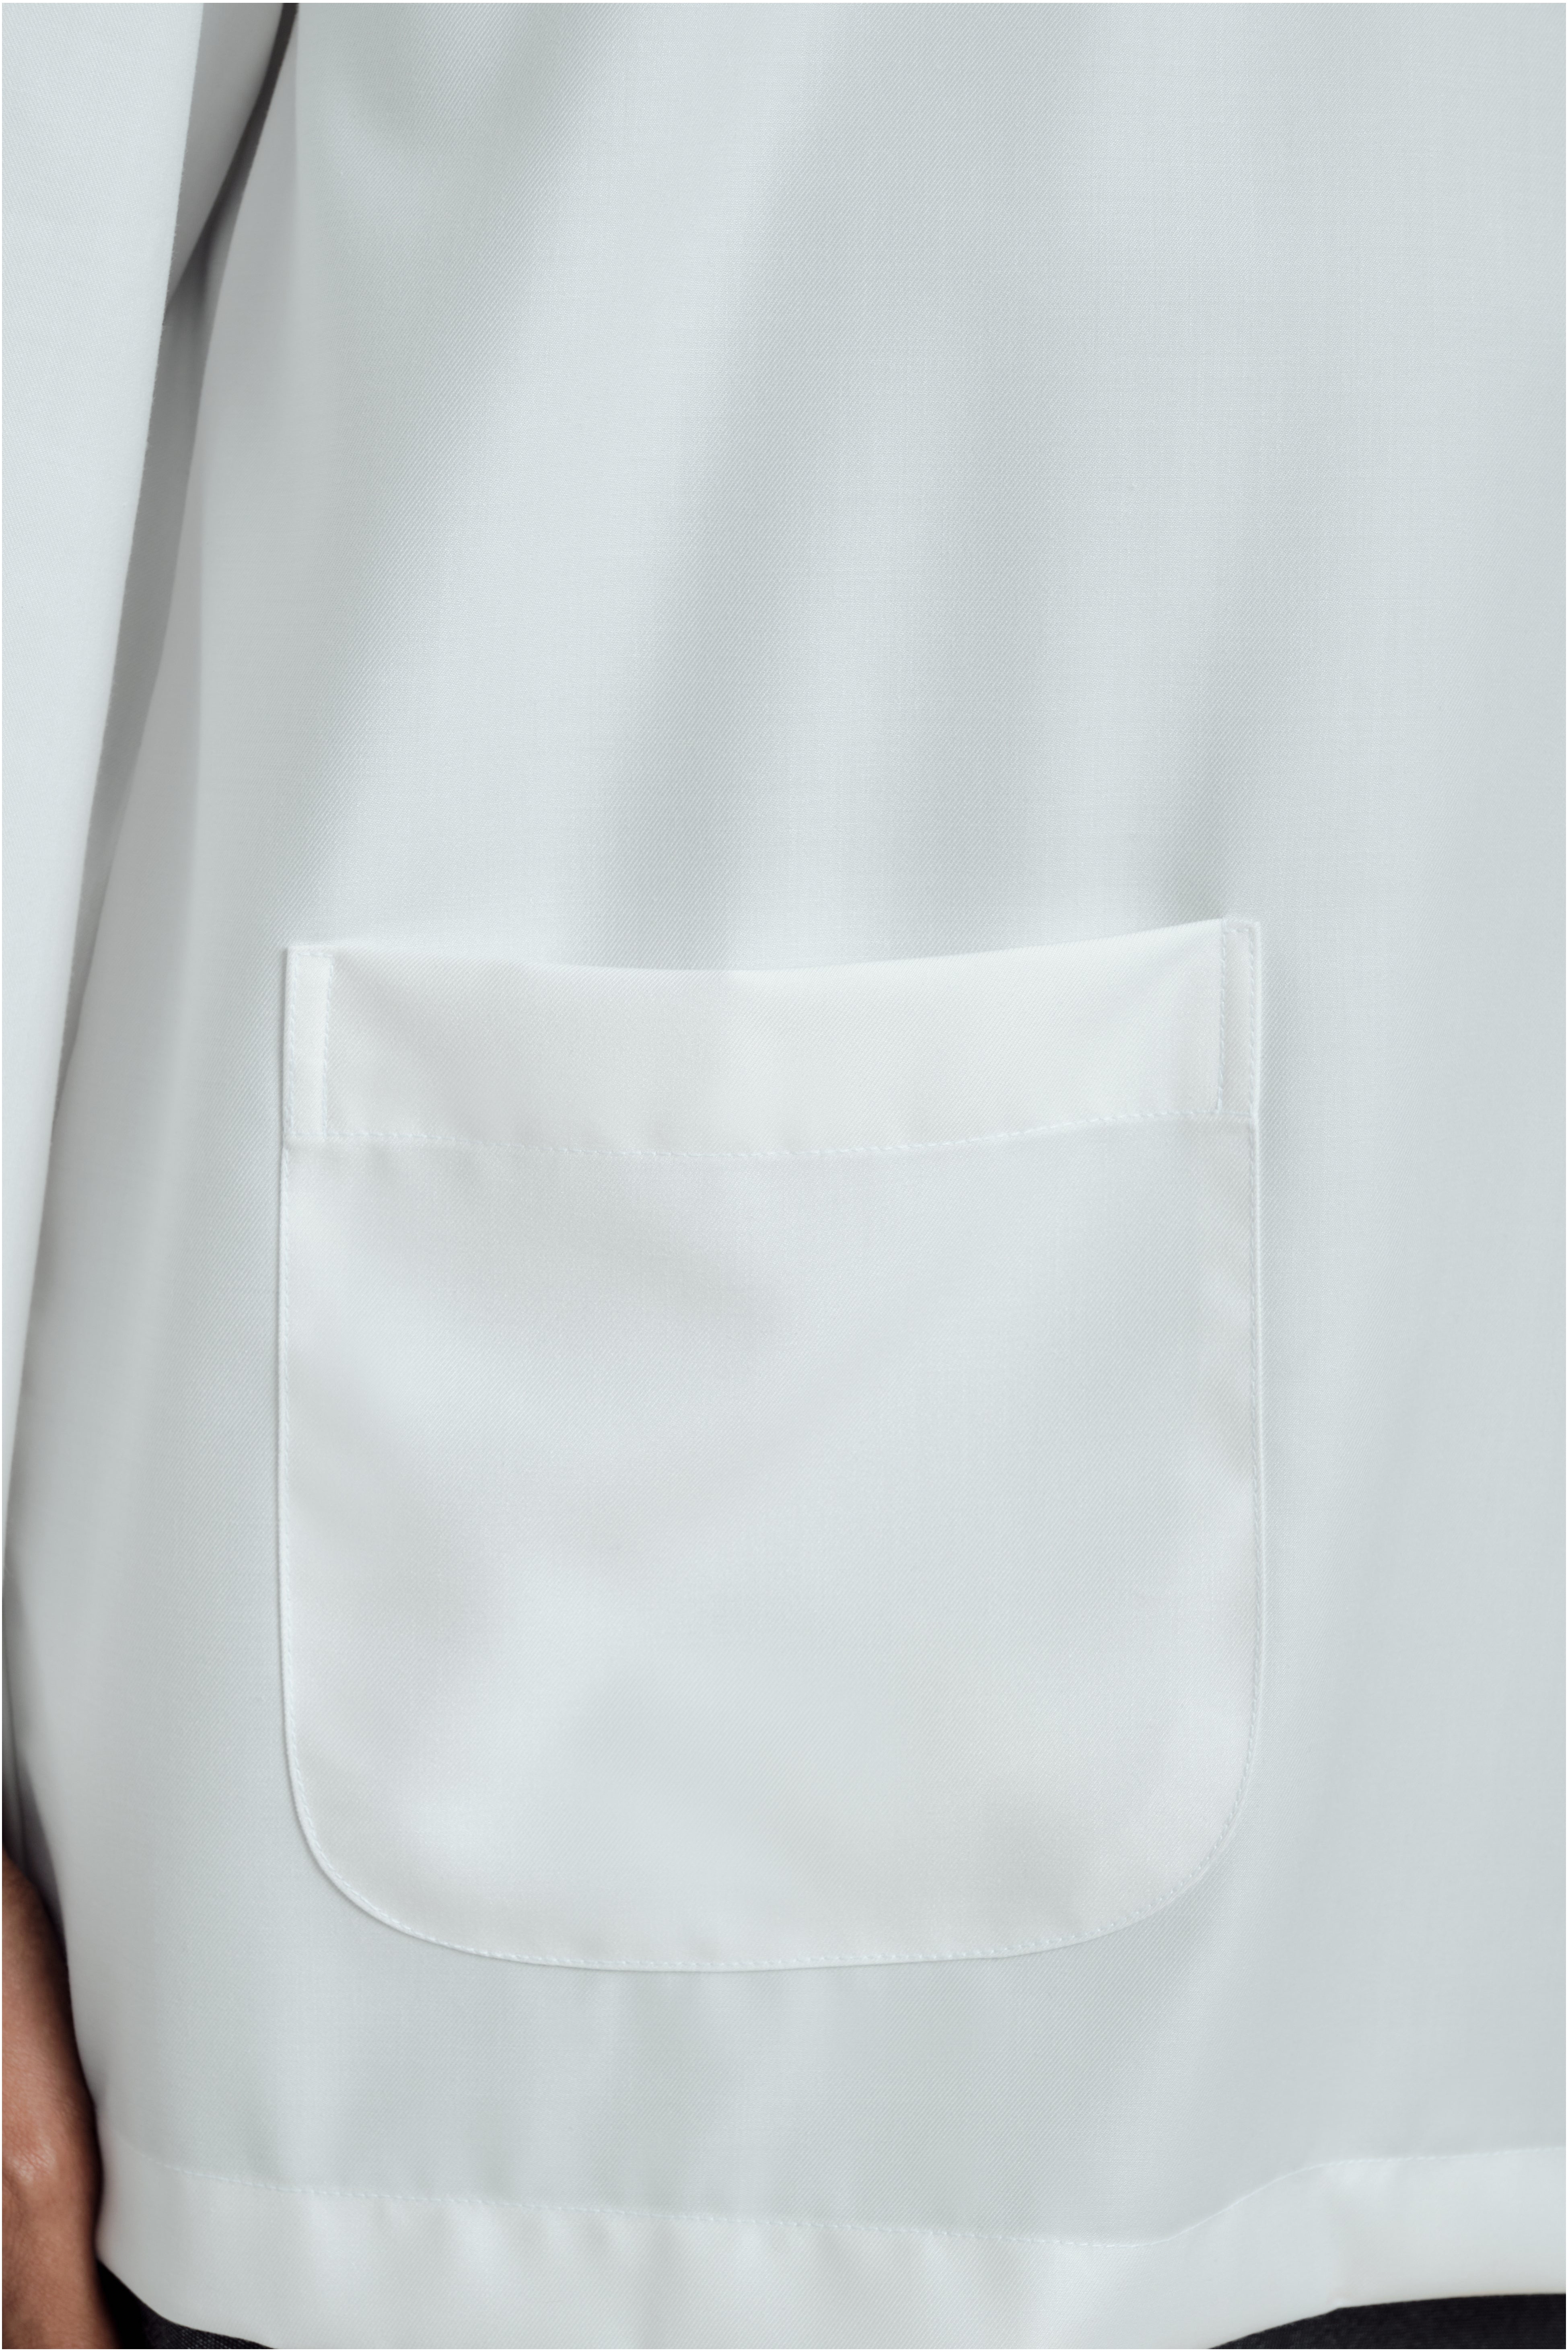 Patawali Classic Fit Baju Melayu Teluk Belanga - Blanc White